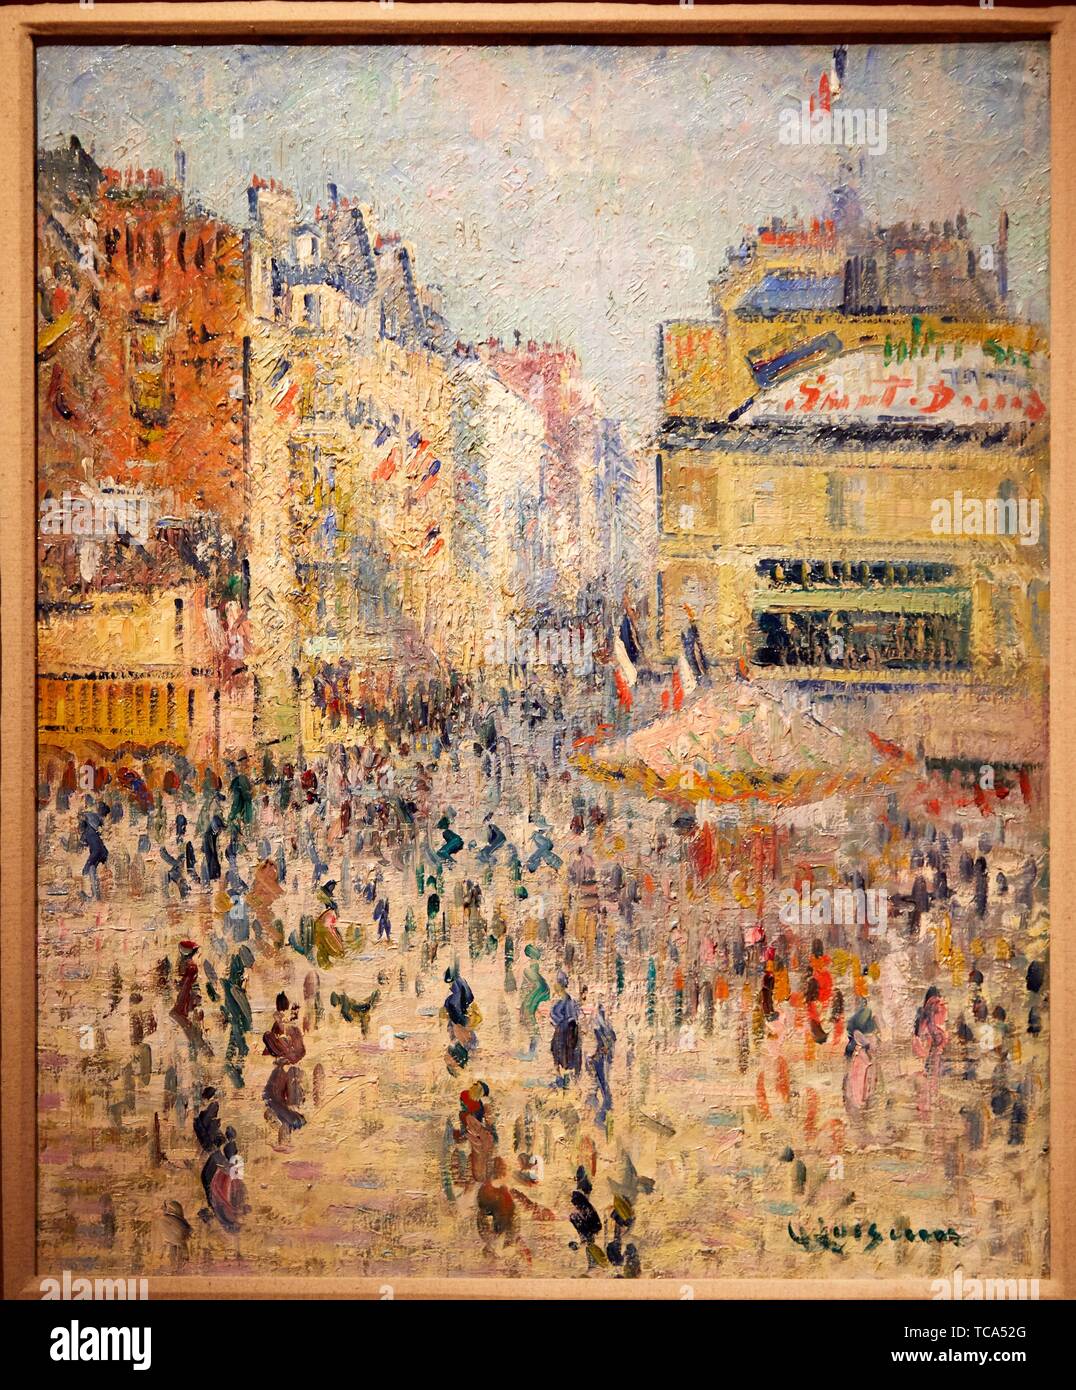 ''' Rue de Clignancourt, Paris, 14. Juli'', 1925, Gustave Loiseau, Thyssen Bornemisza Museum, Madrid, Spanien, Europa Stockfoto